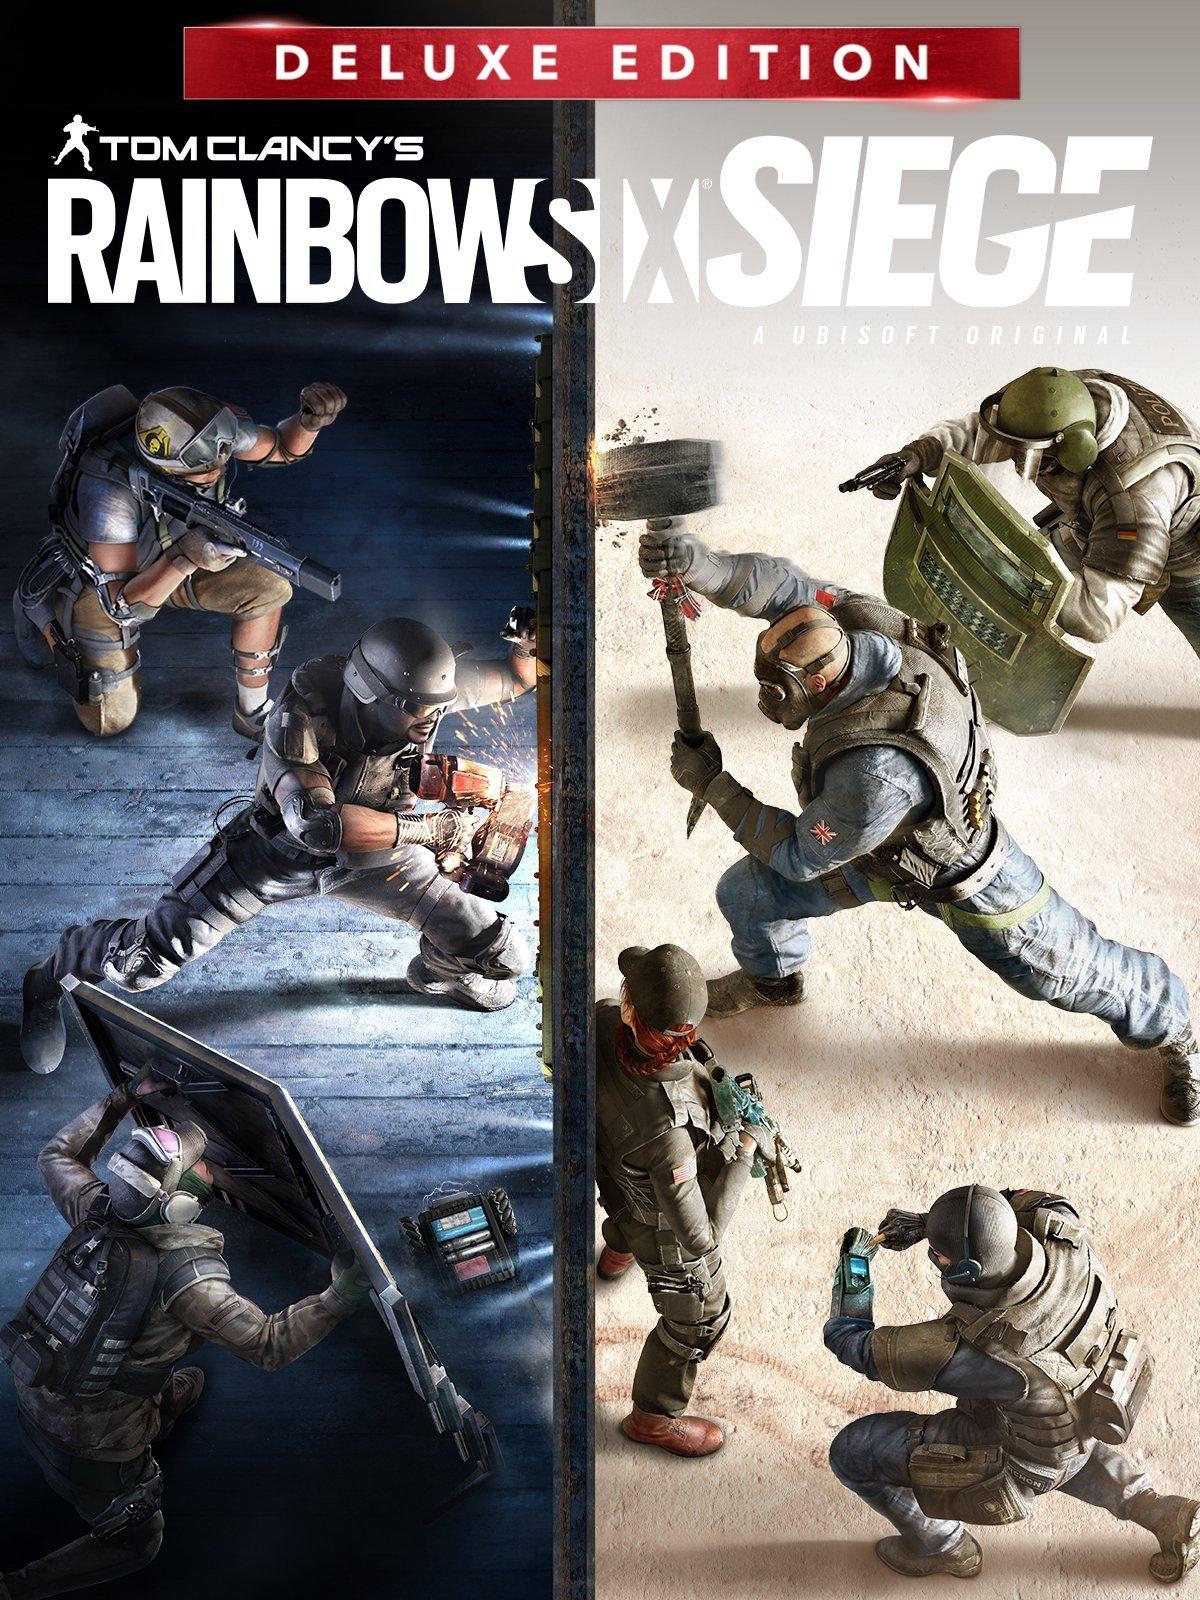 gamestop rainbow six siege xbox